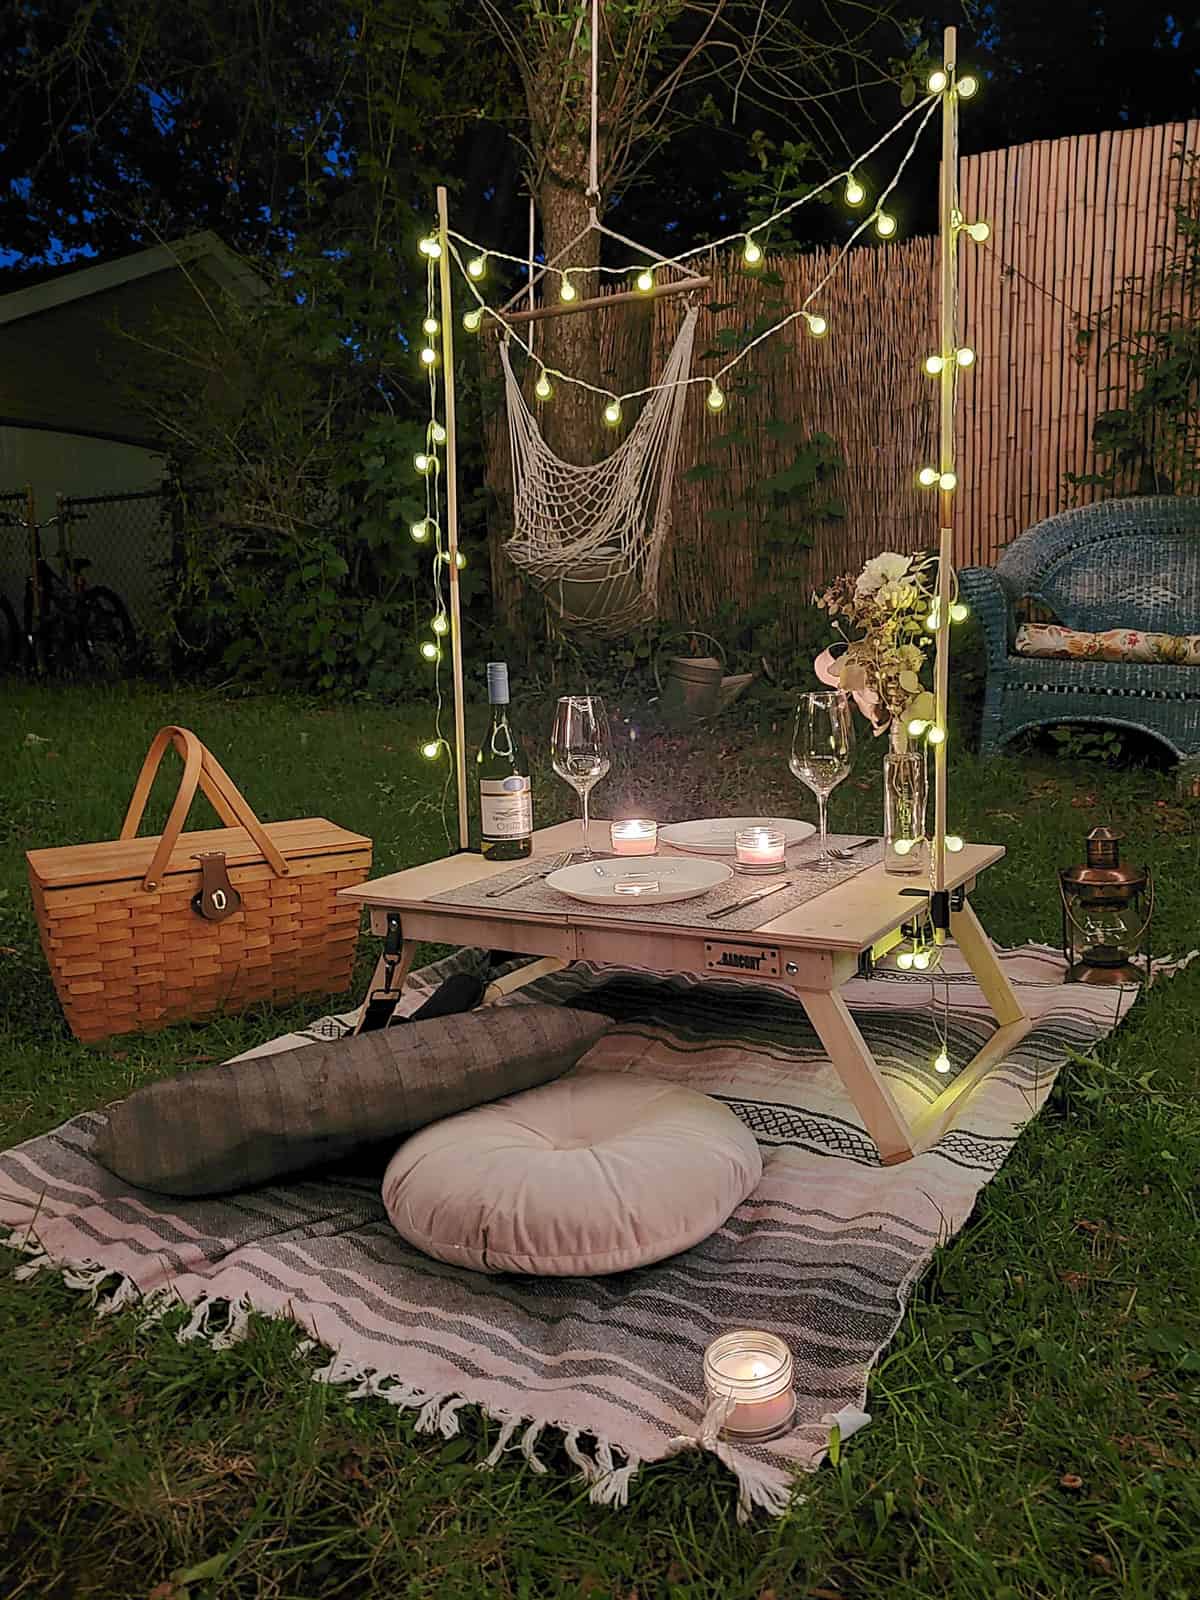 Romantic boho picnic setting at night with fairy lights.